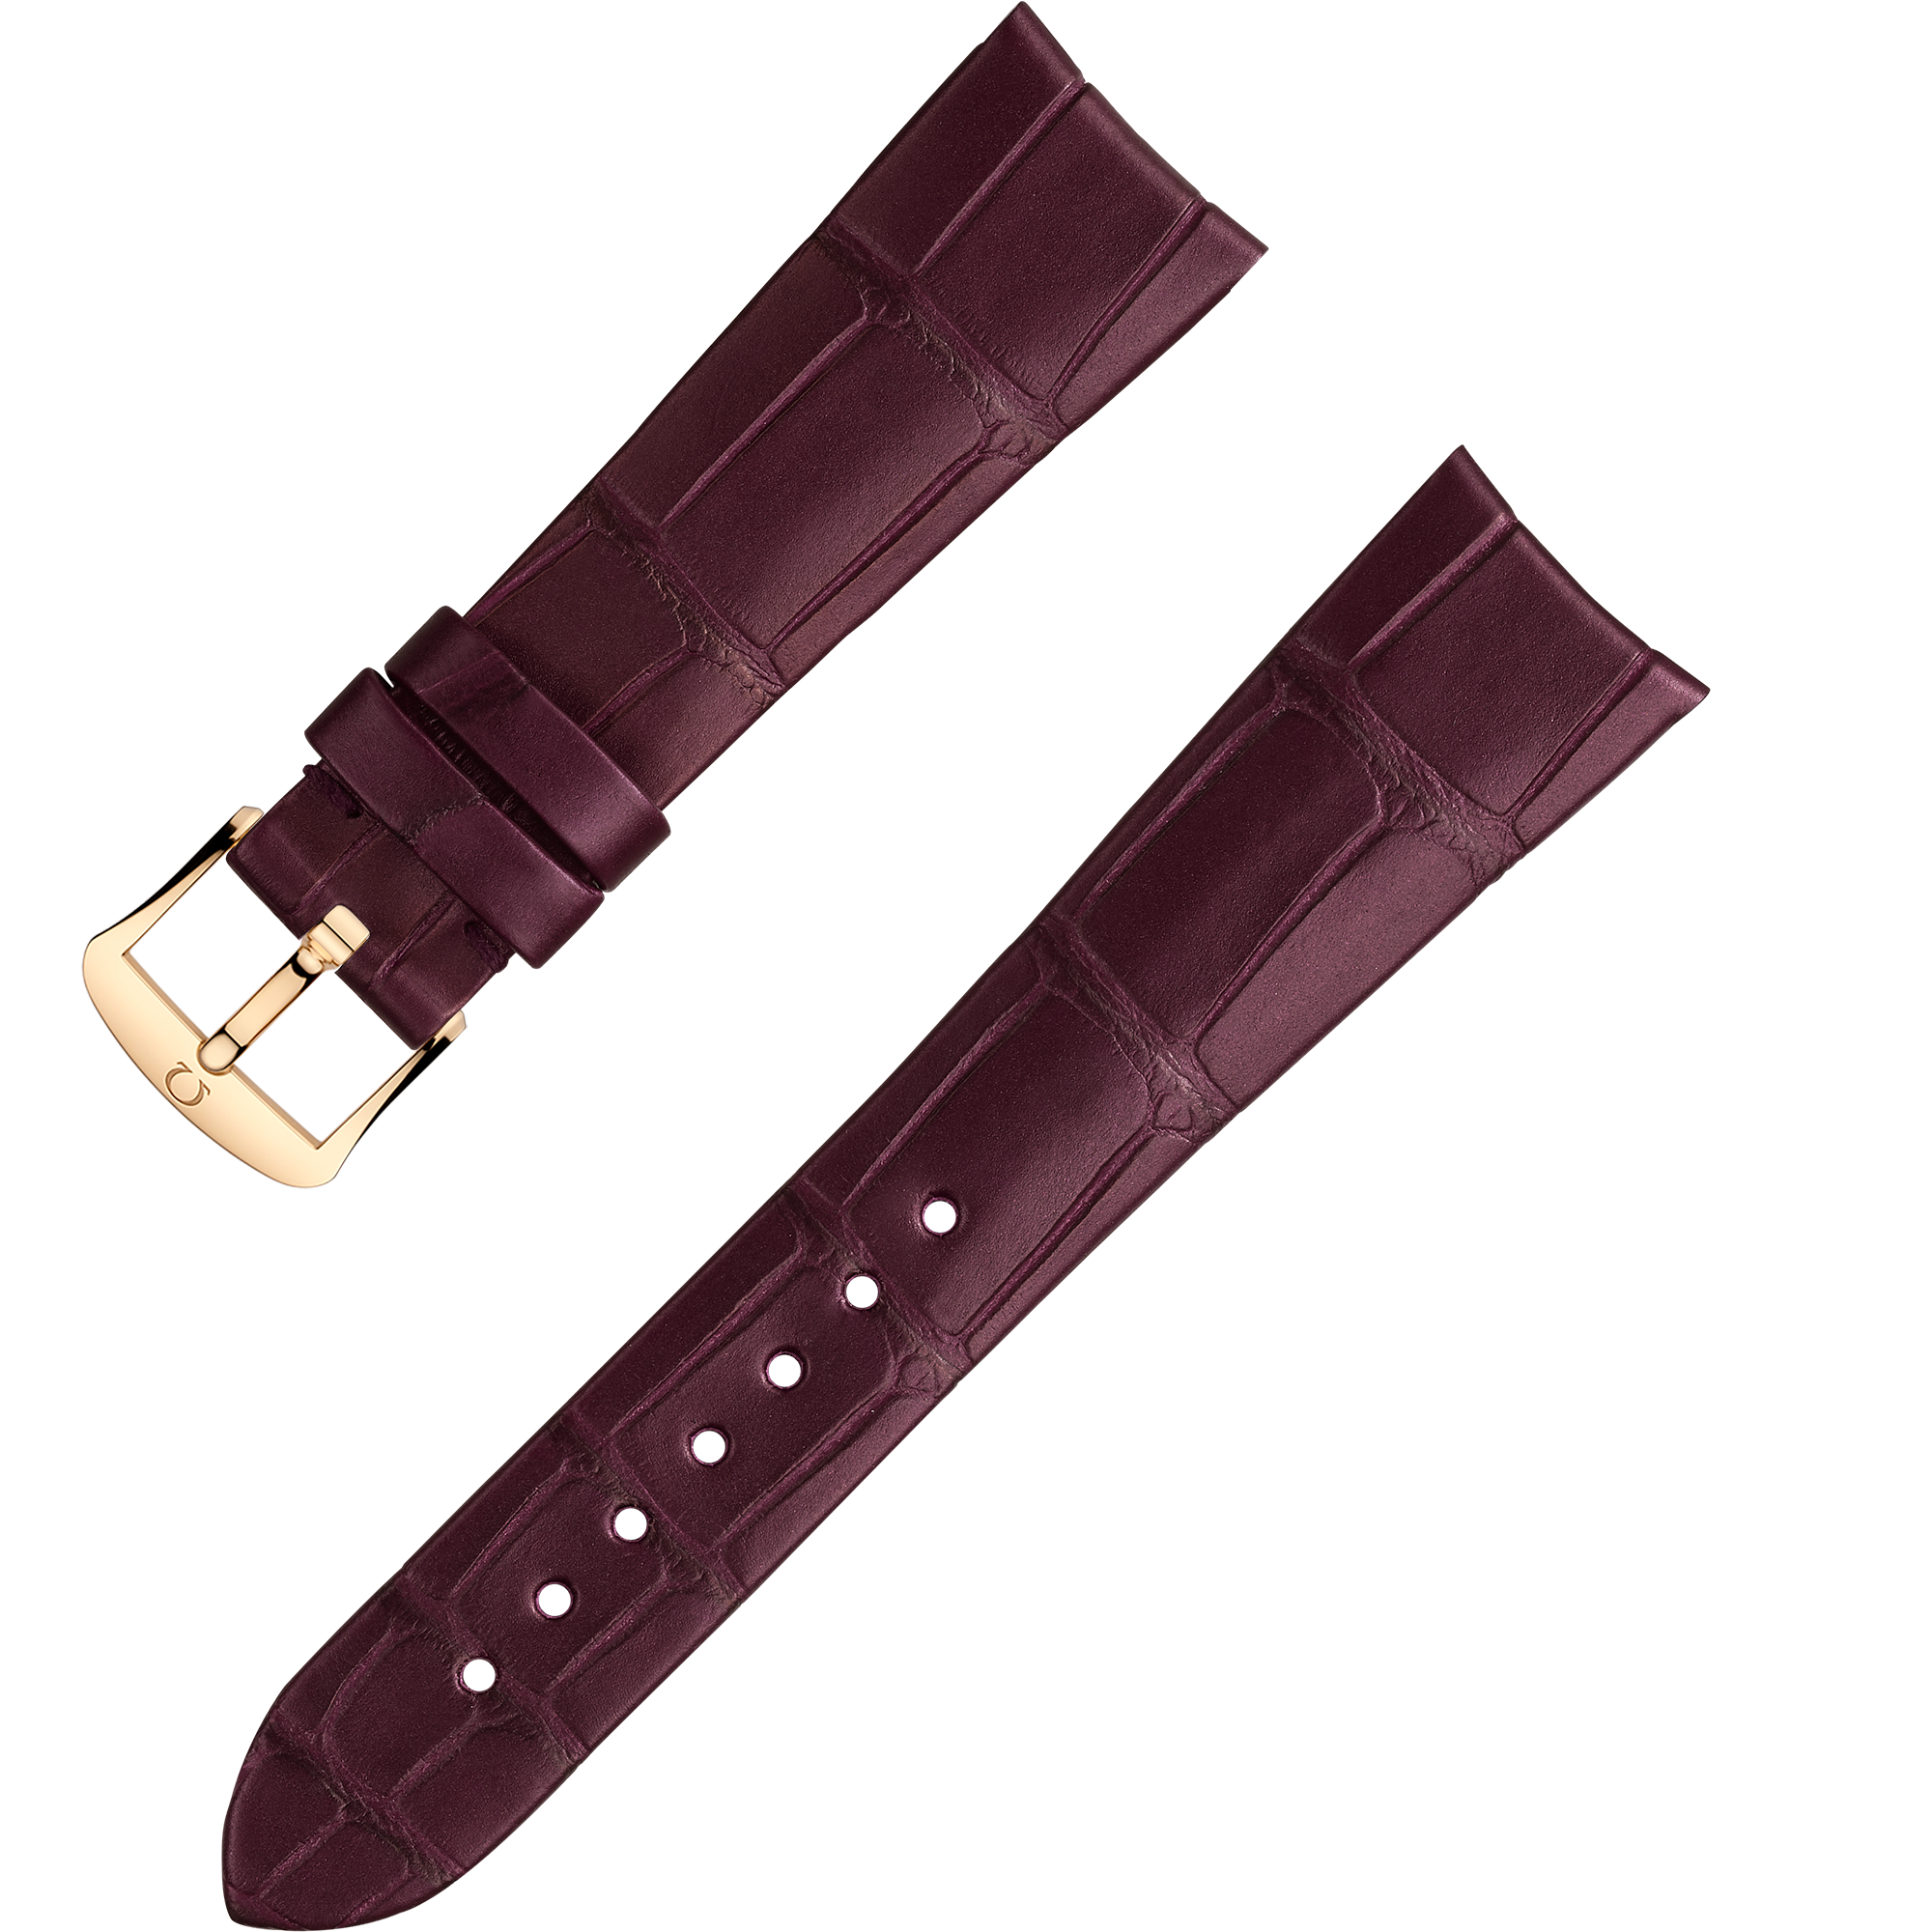 Two-piece strap - Burgundy alligator leather strap with pin buckle - 032CUZ009877W